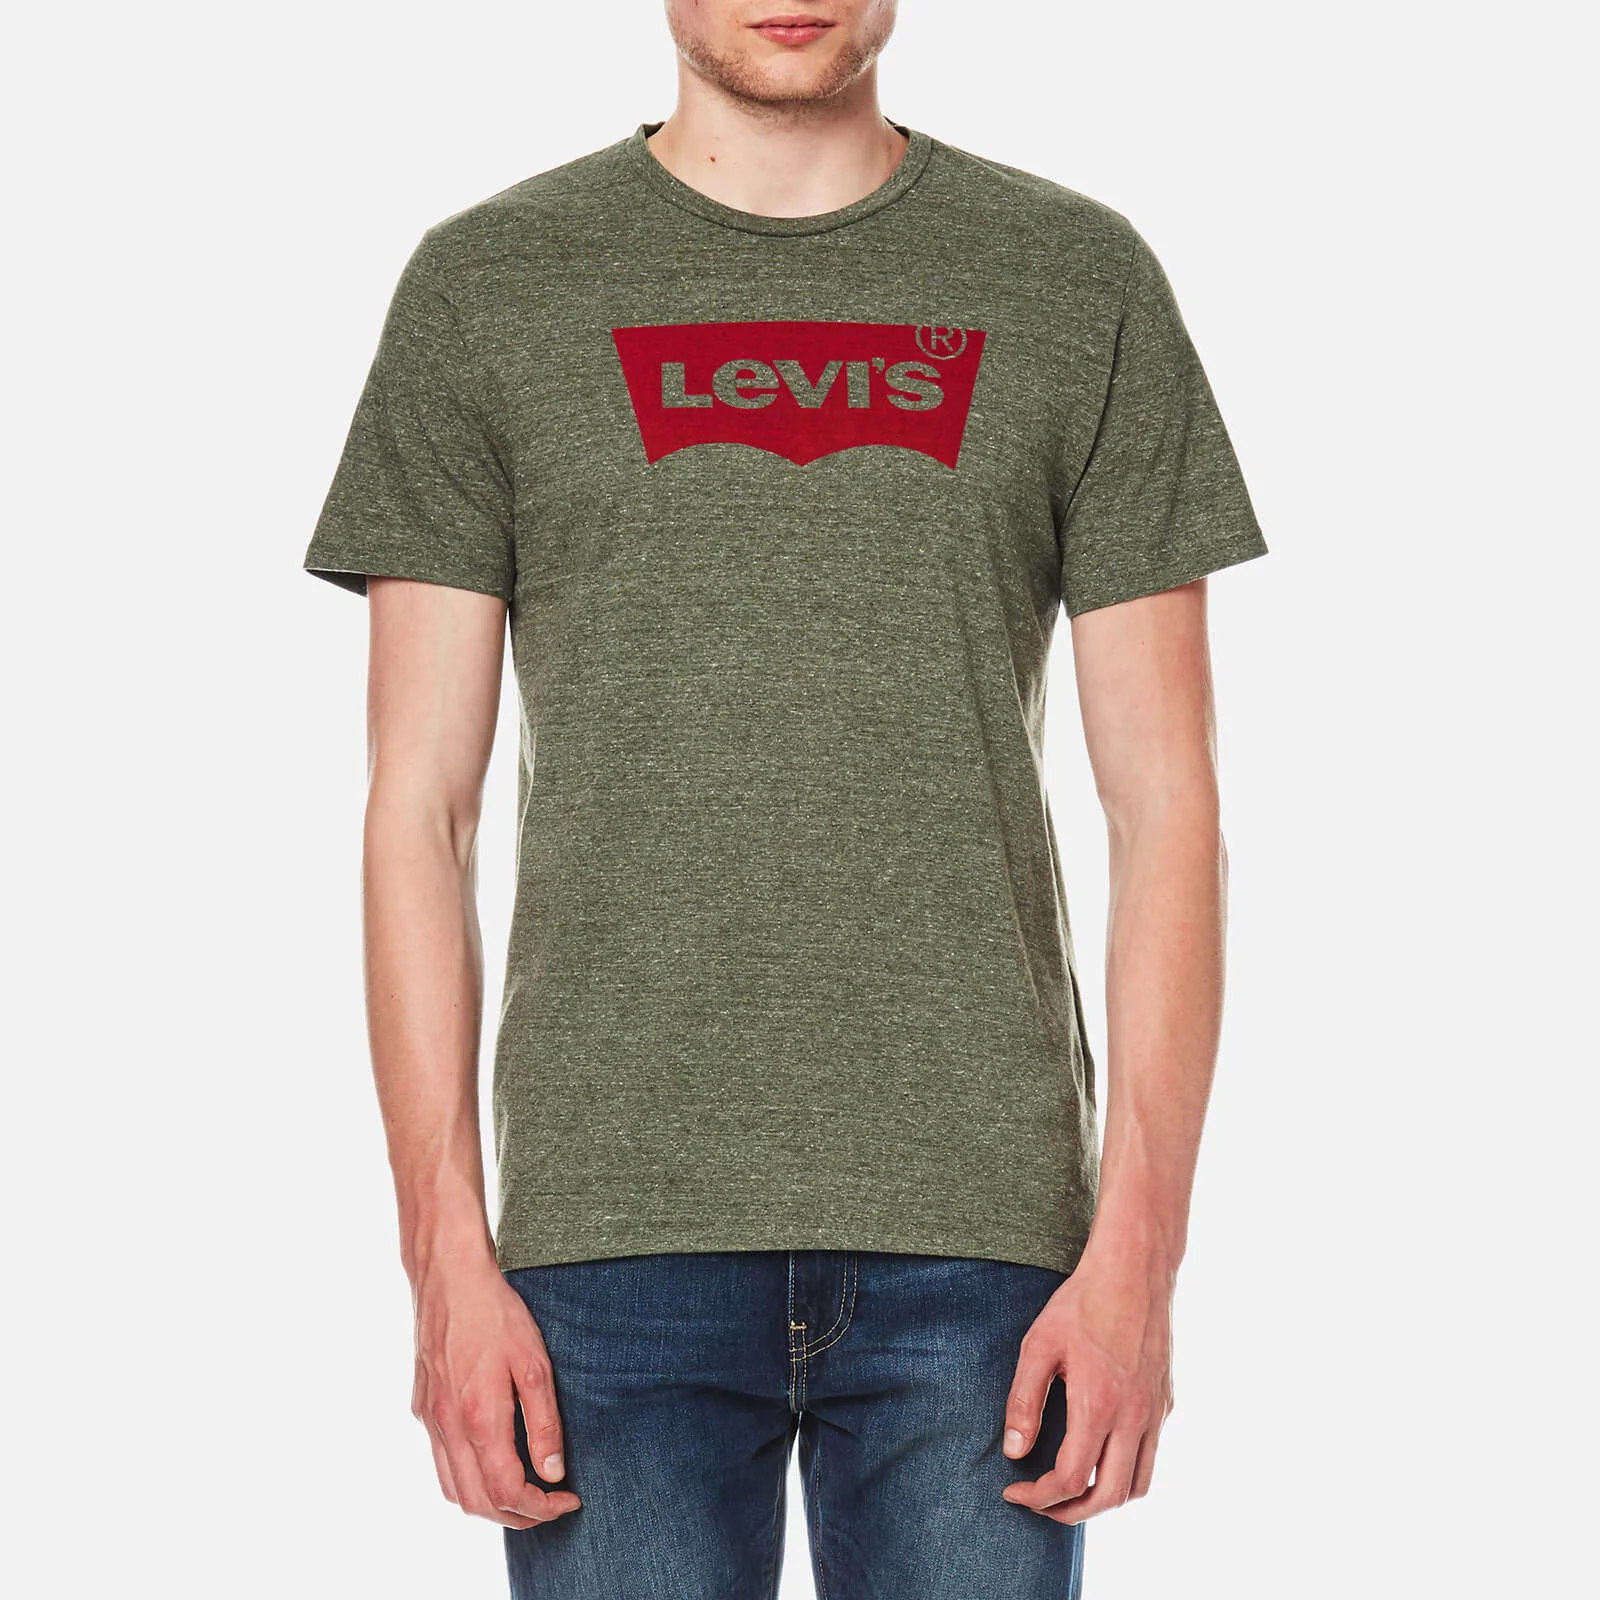 Levi's Men's Housemark Graphic T-Shirt - Olive Night Tri Blend Image 1